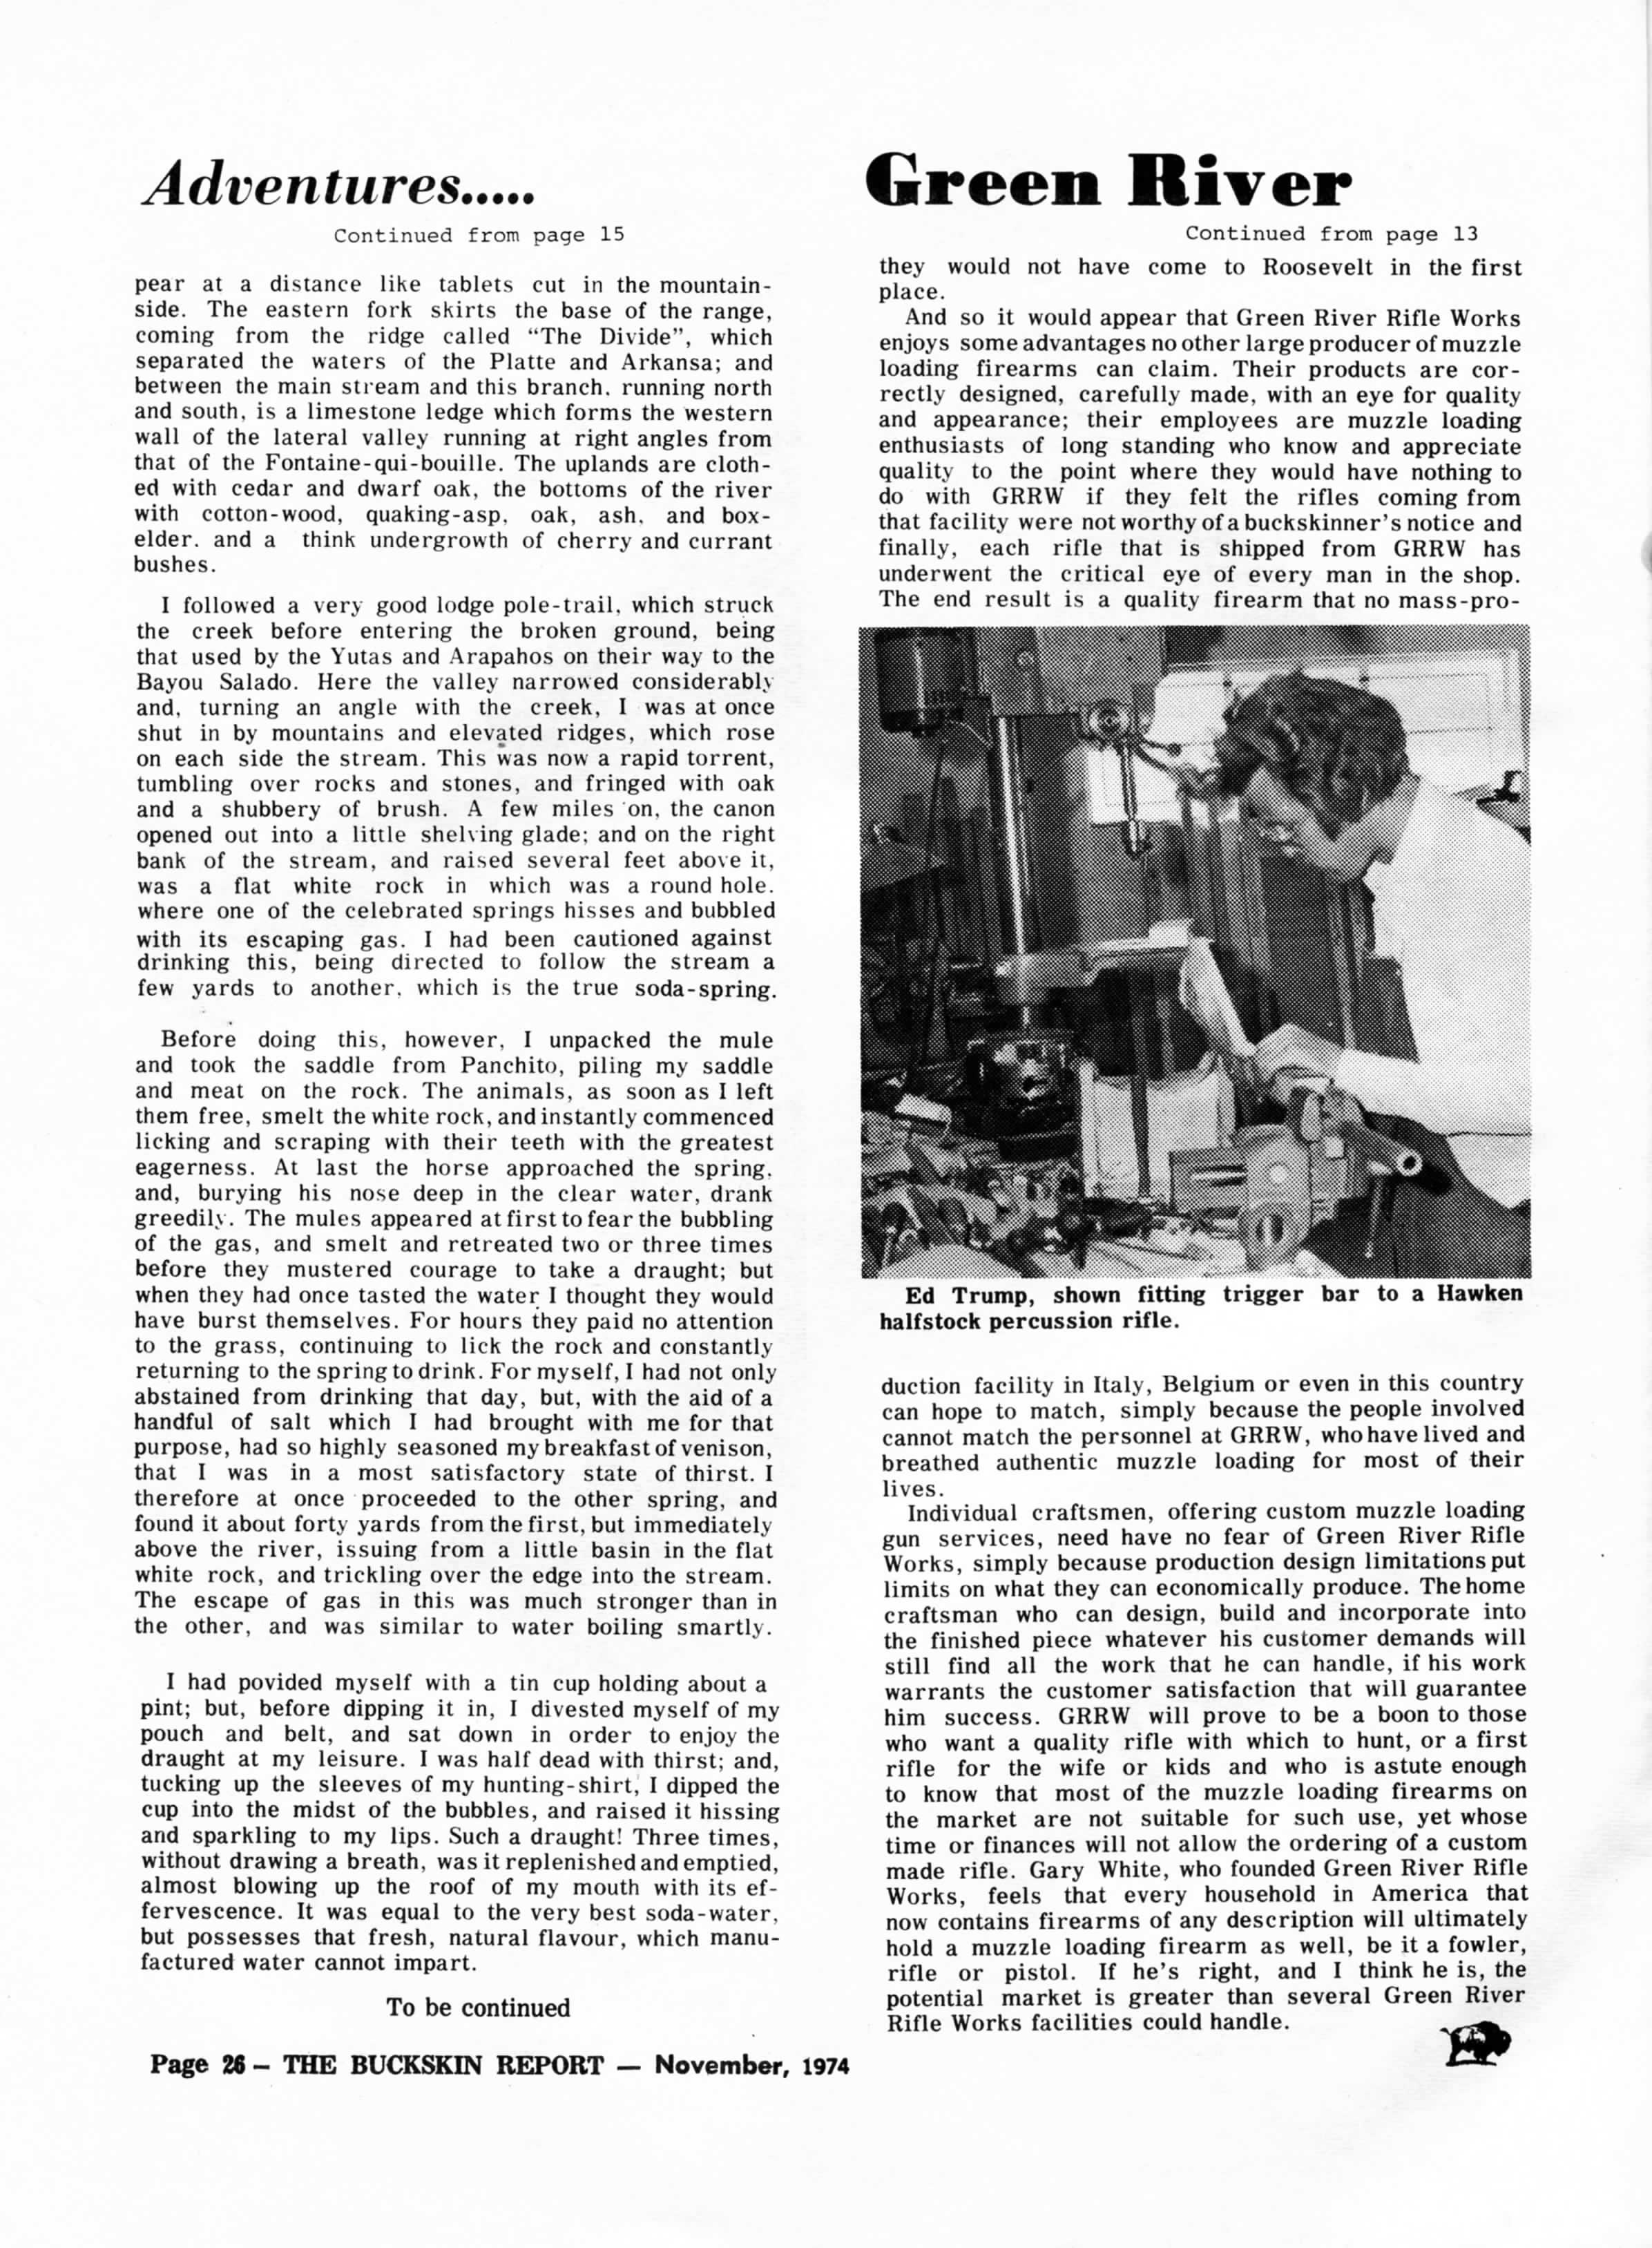 Nov 1974 Buckskin Report Article by John D. Baird about GRRW